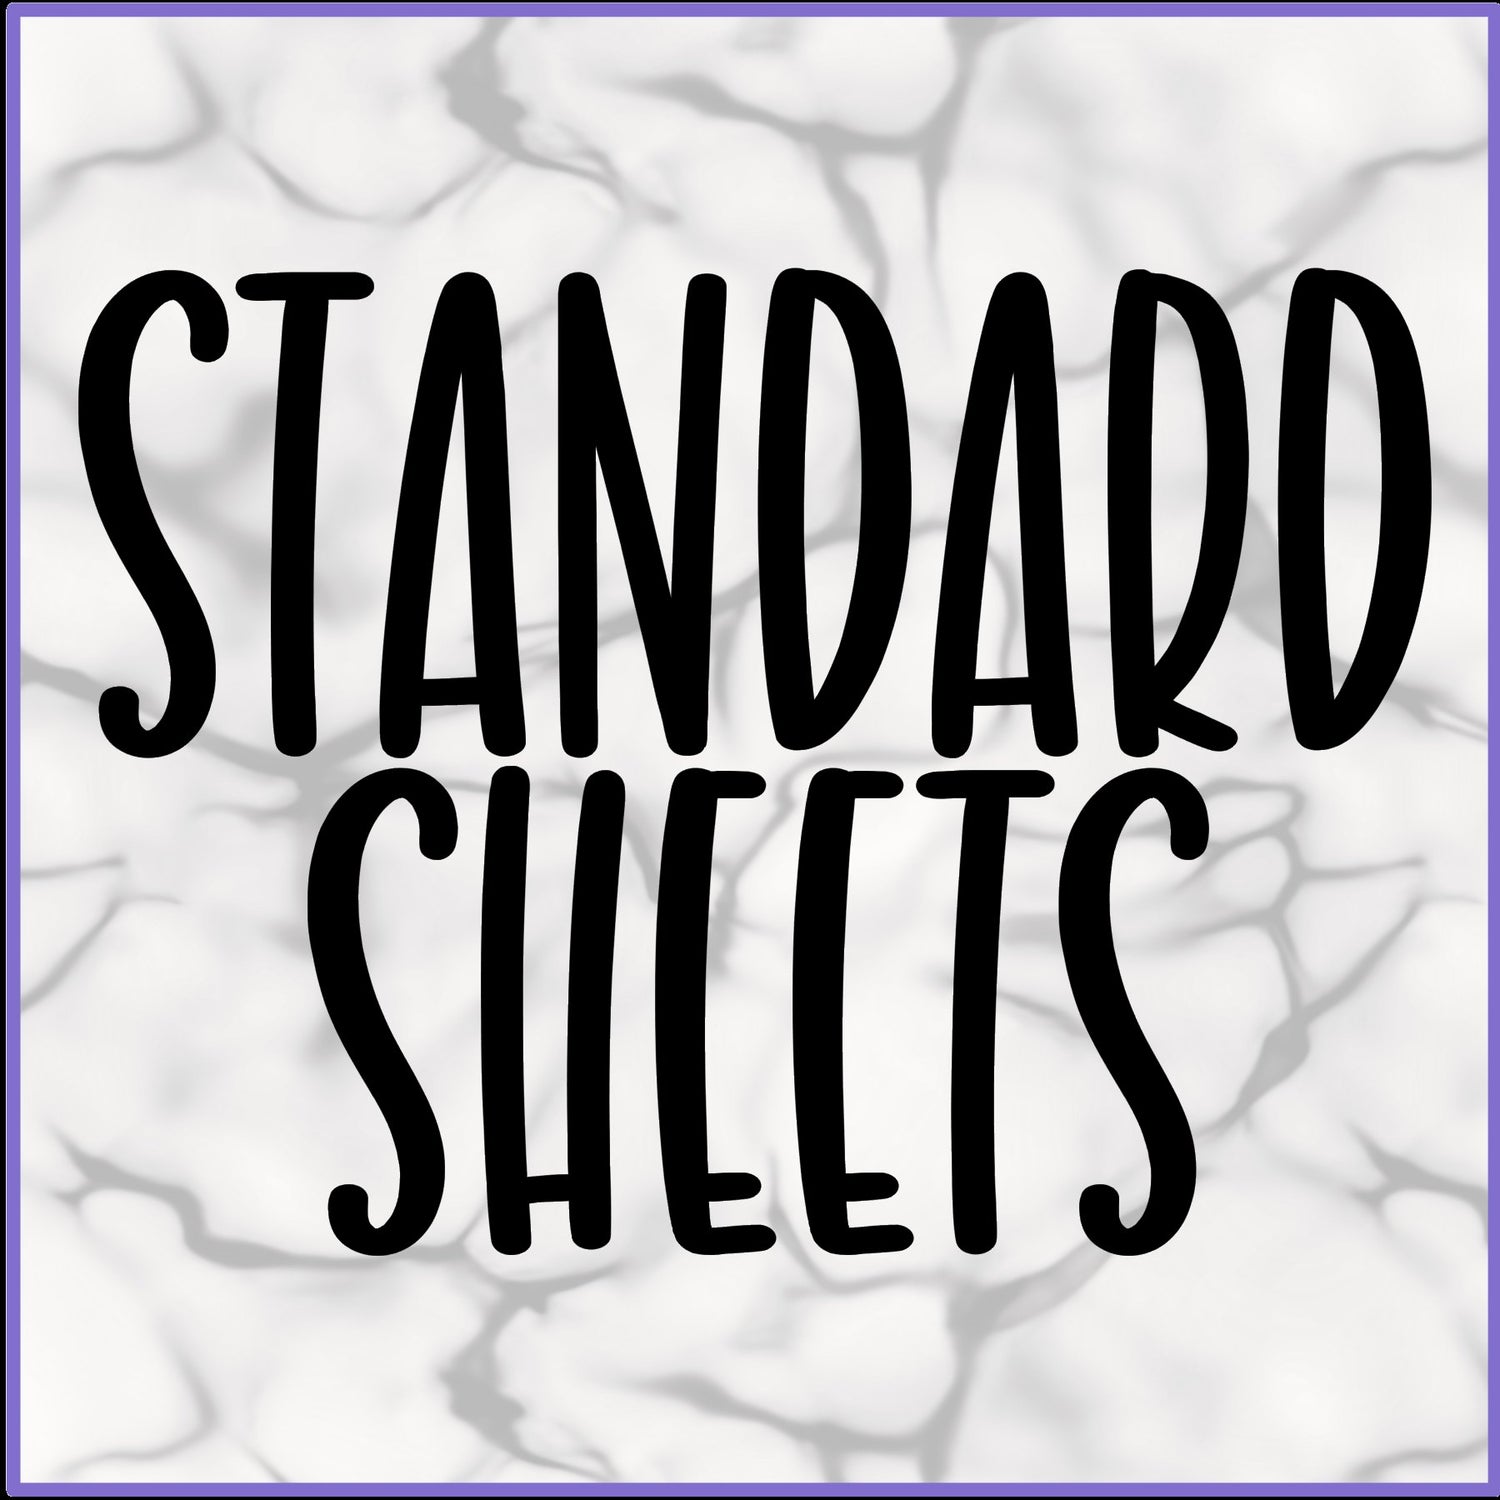 STANDARD SHEETS